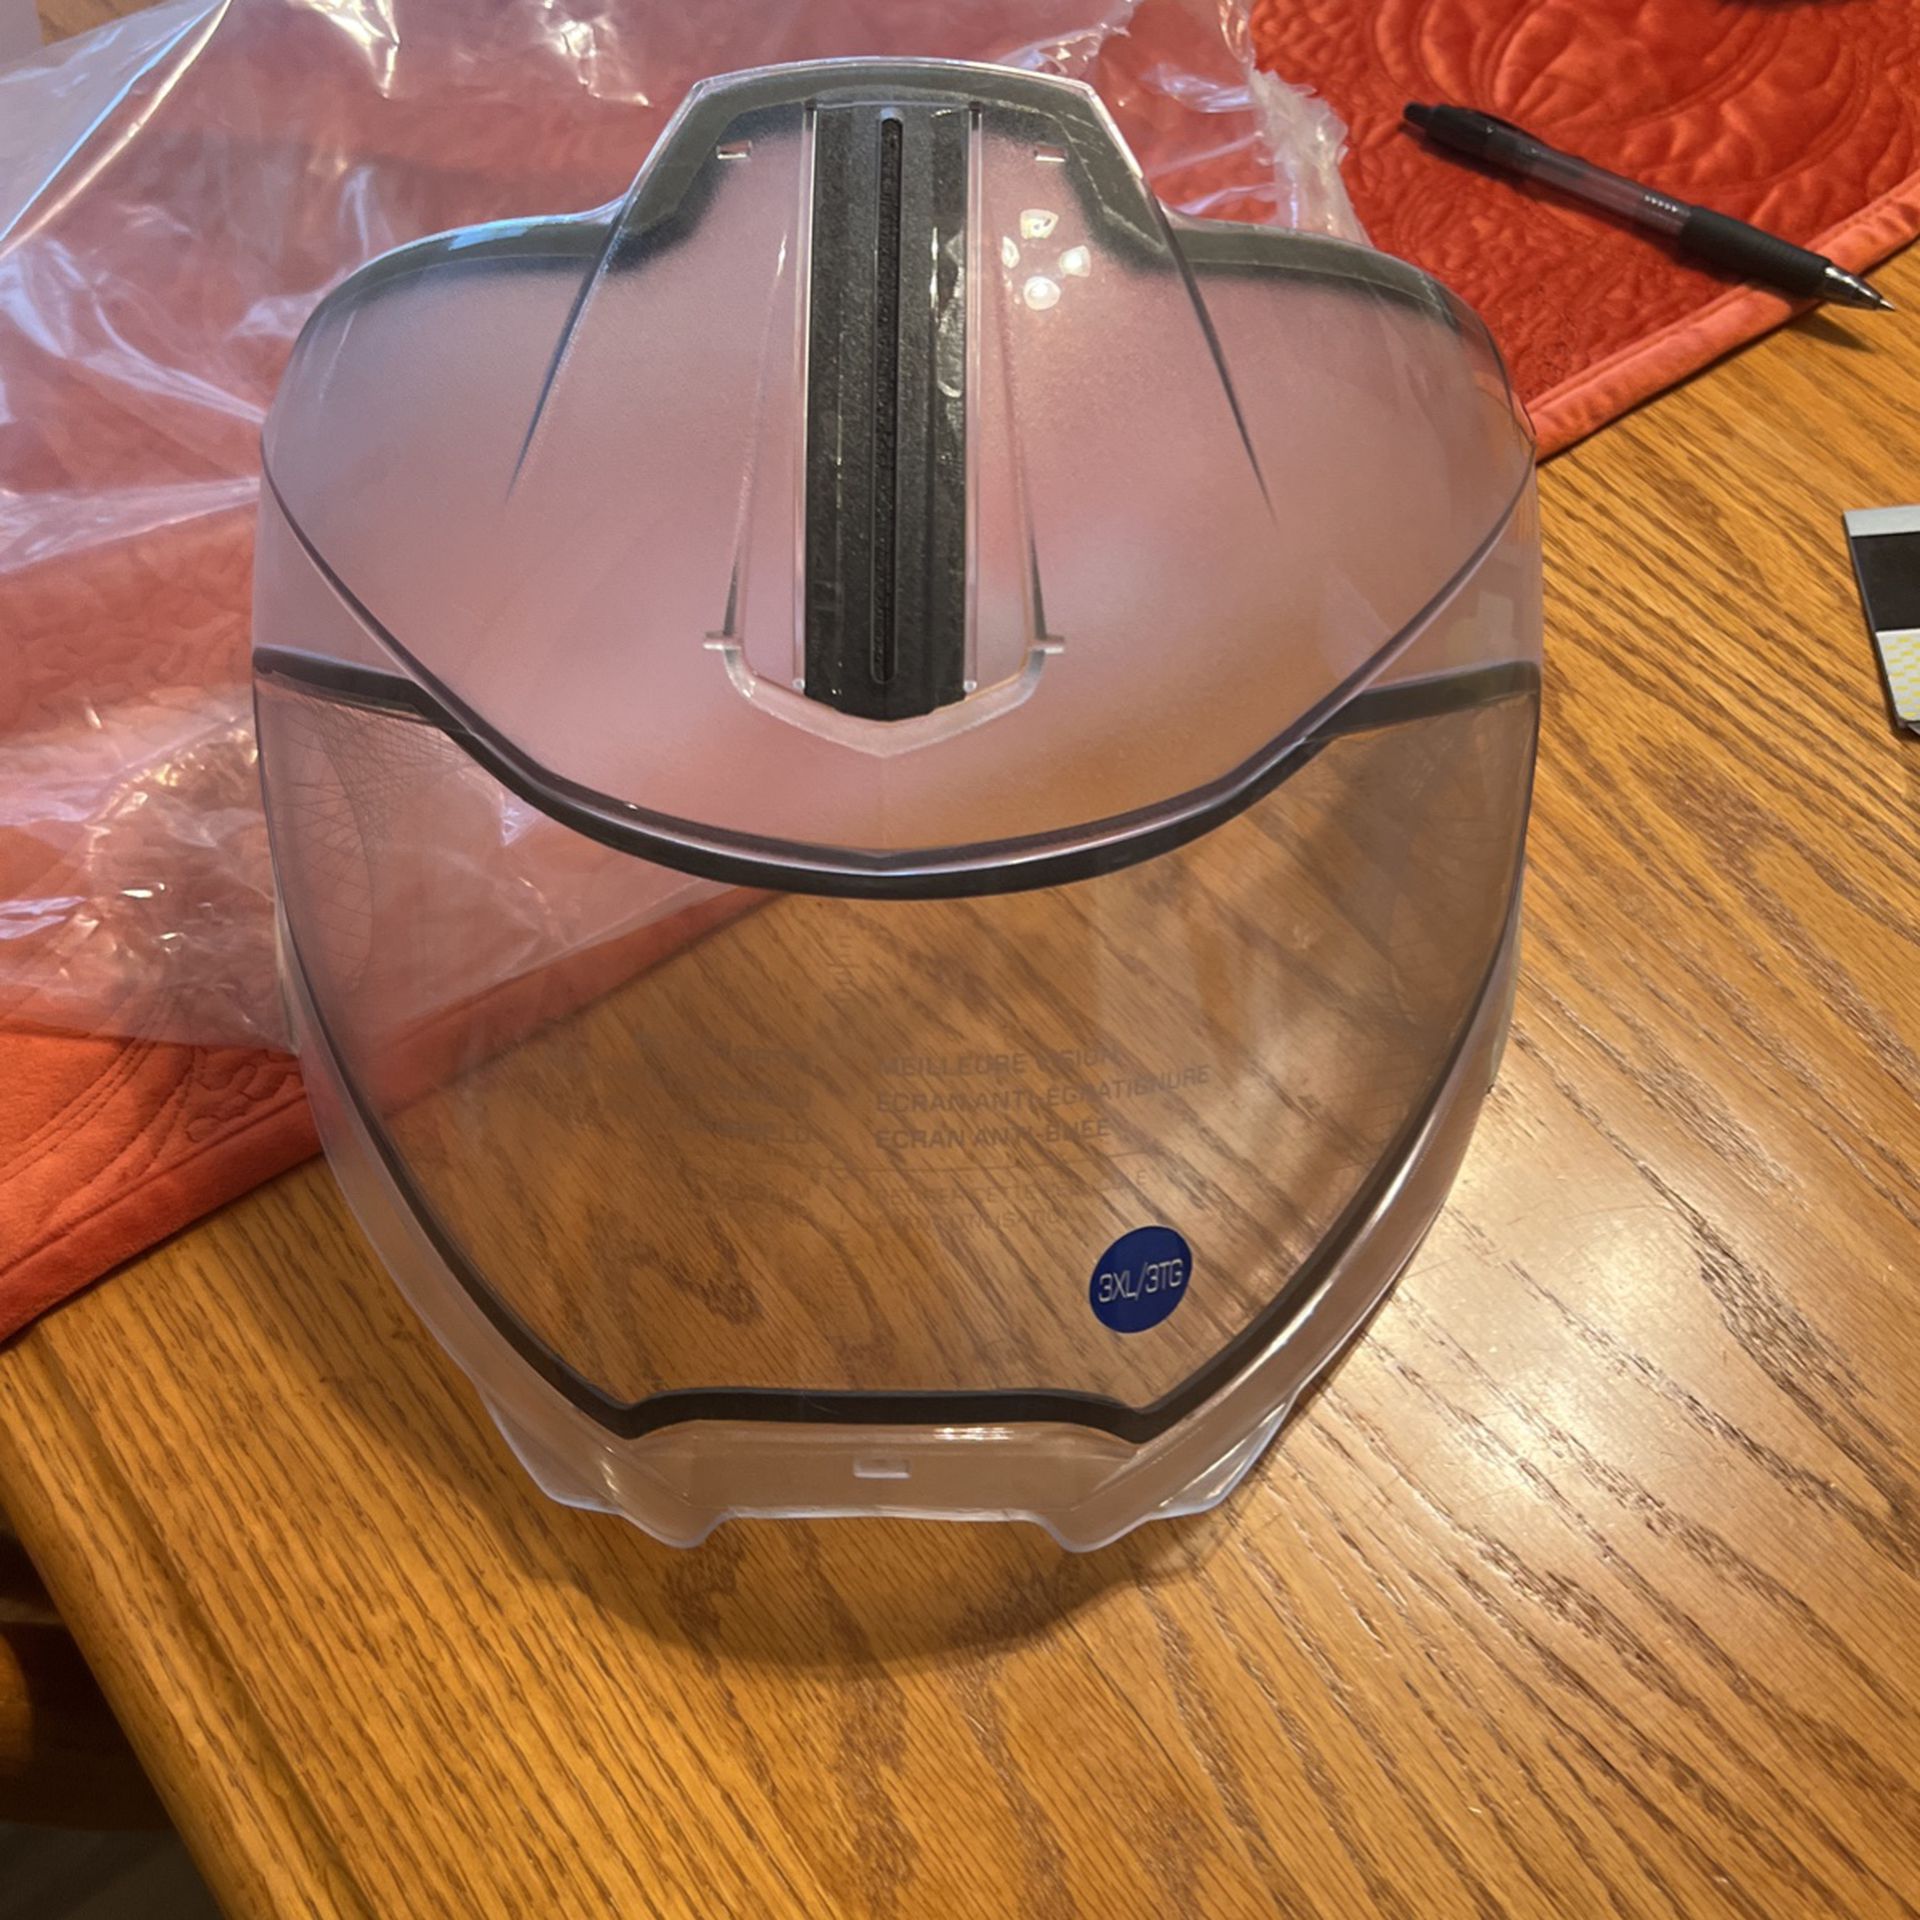 Skidoo Modular Helmet Face Shield.